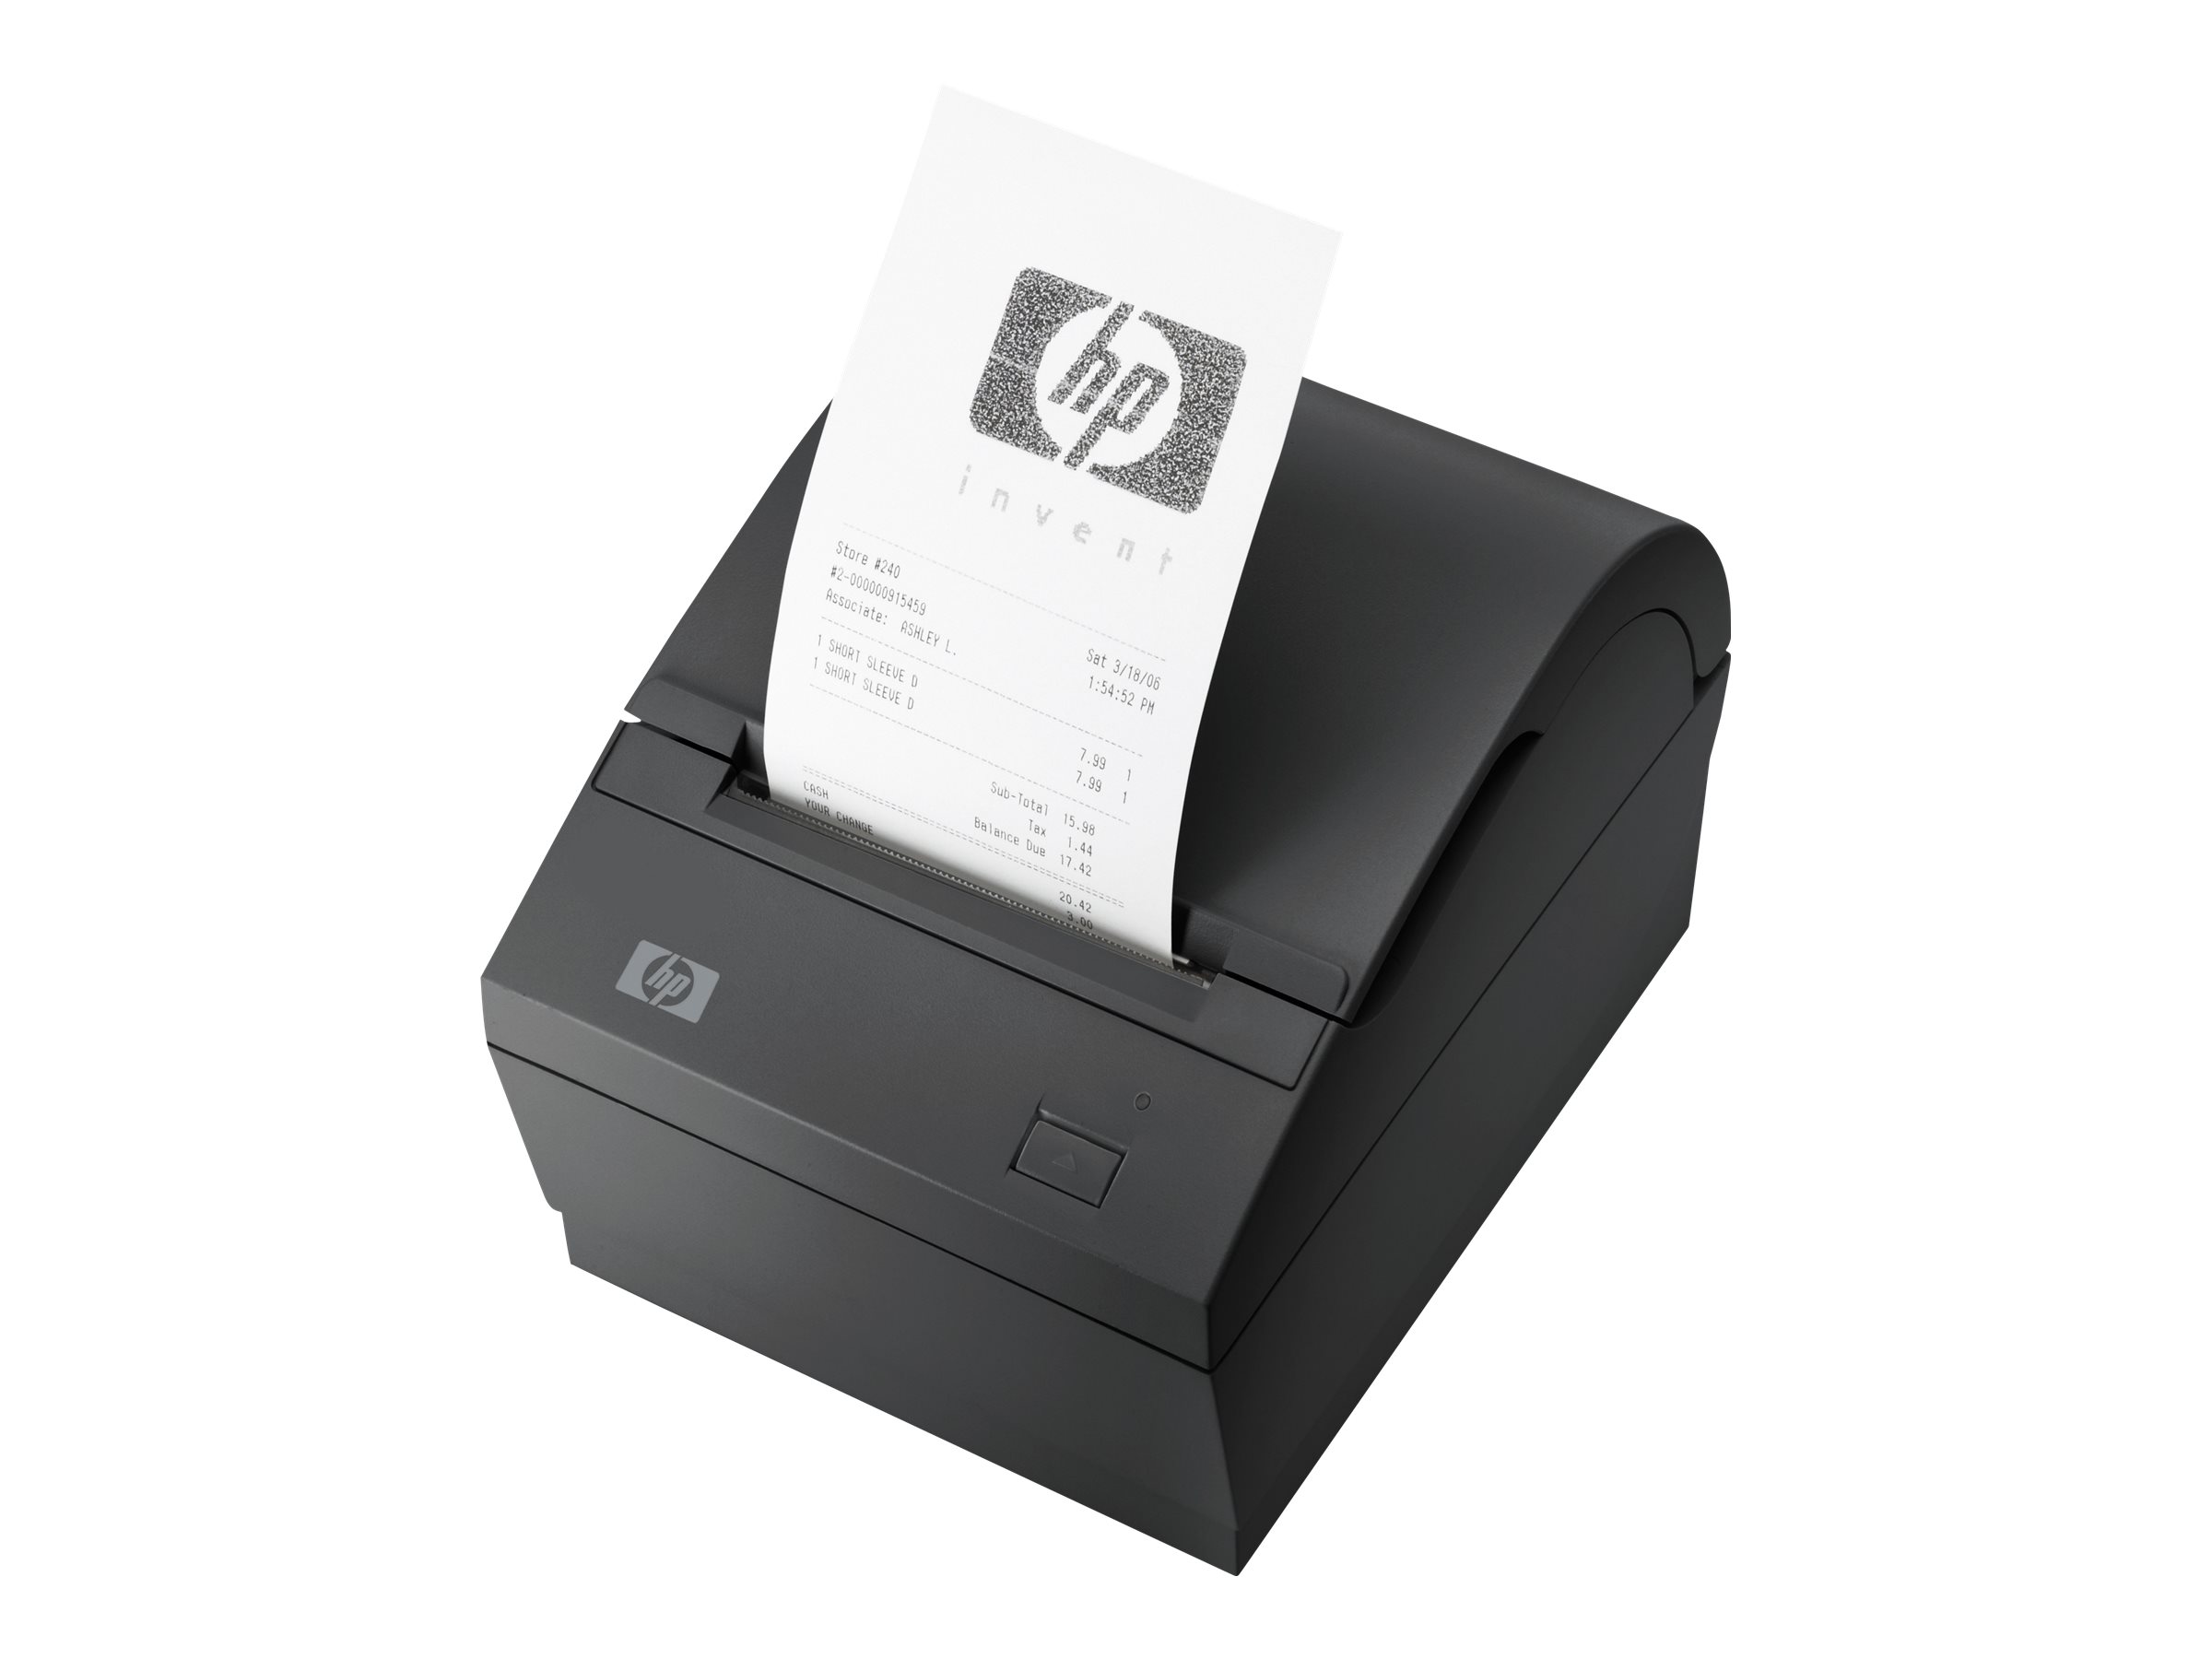 HP USB Single Station Receipt Printer